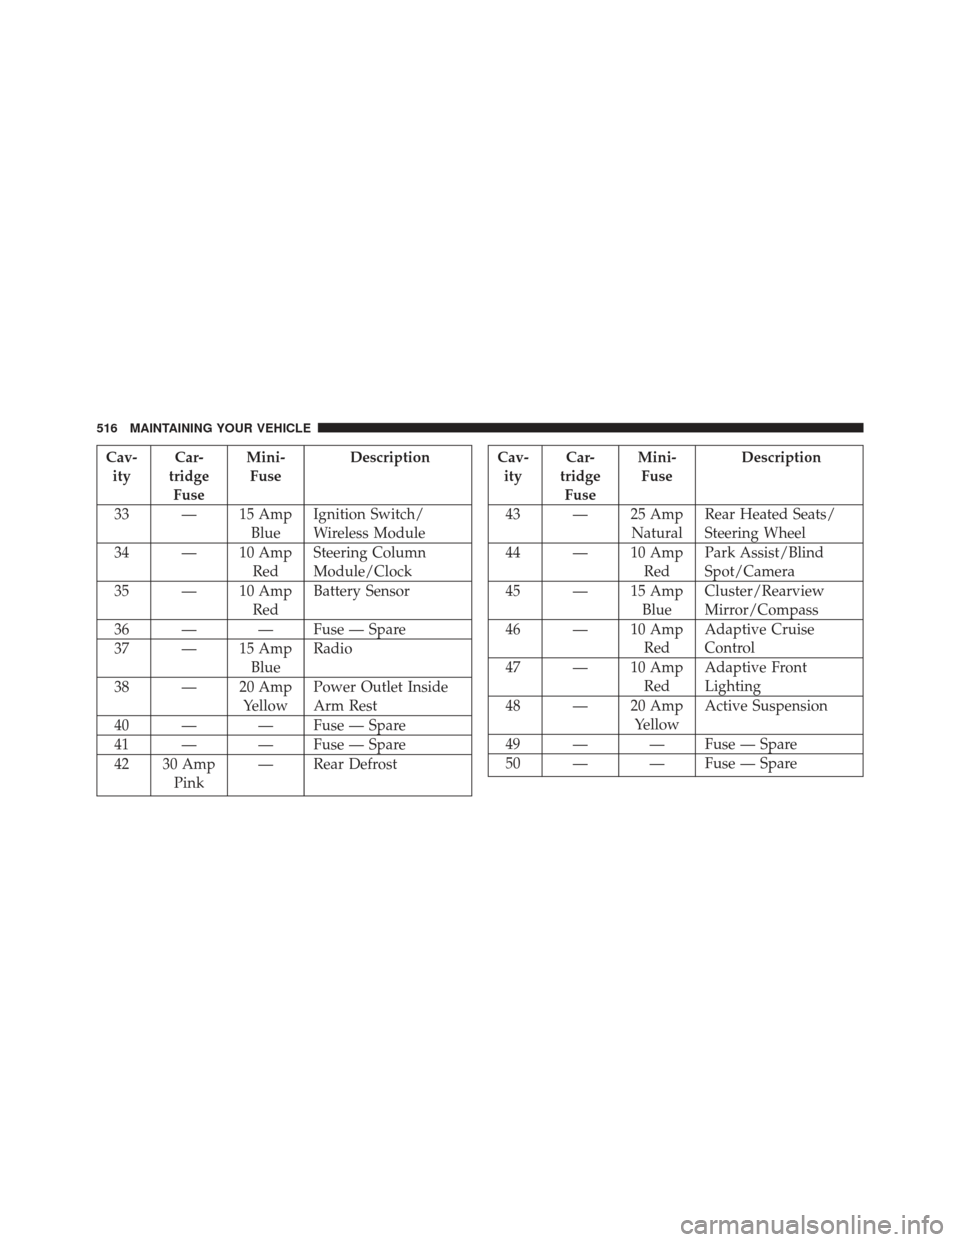 CHRYSLER 300 SRT 2013 2.G Owners Manual Cav-ity Car-
tridge Fuse Mini-
Fuse Description
33 — 15 Amp BlueIgnition Switch/
Wireless Module
34 — 10 Amp RedSteering Column
Module/Clock
35 — 10 Amp RedBattery Sensor
36 — — Fuse — Spa